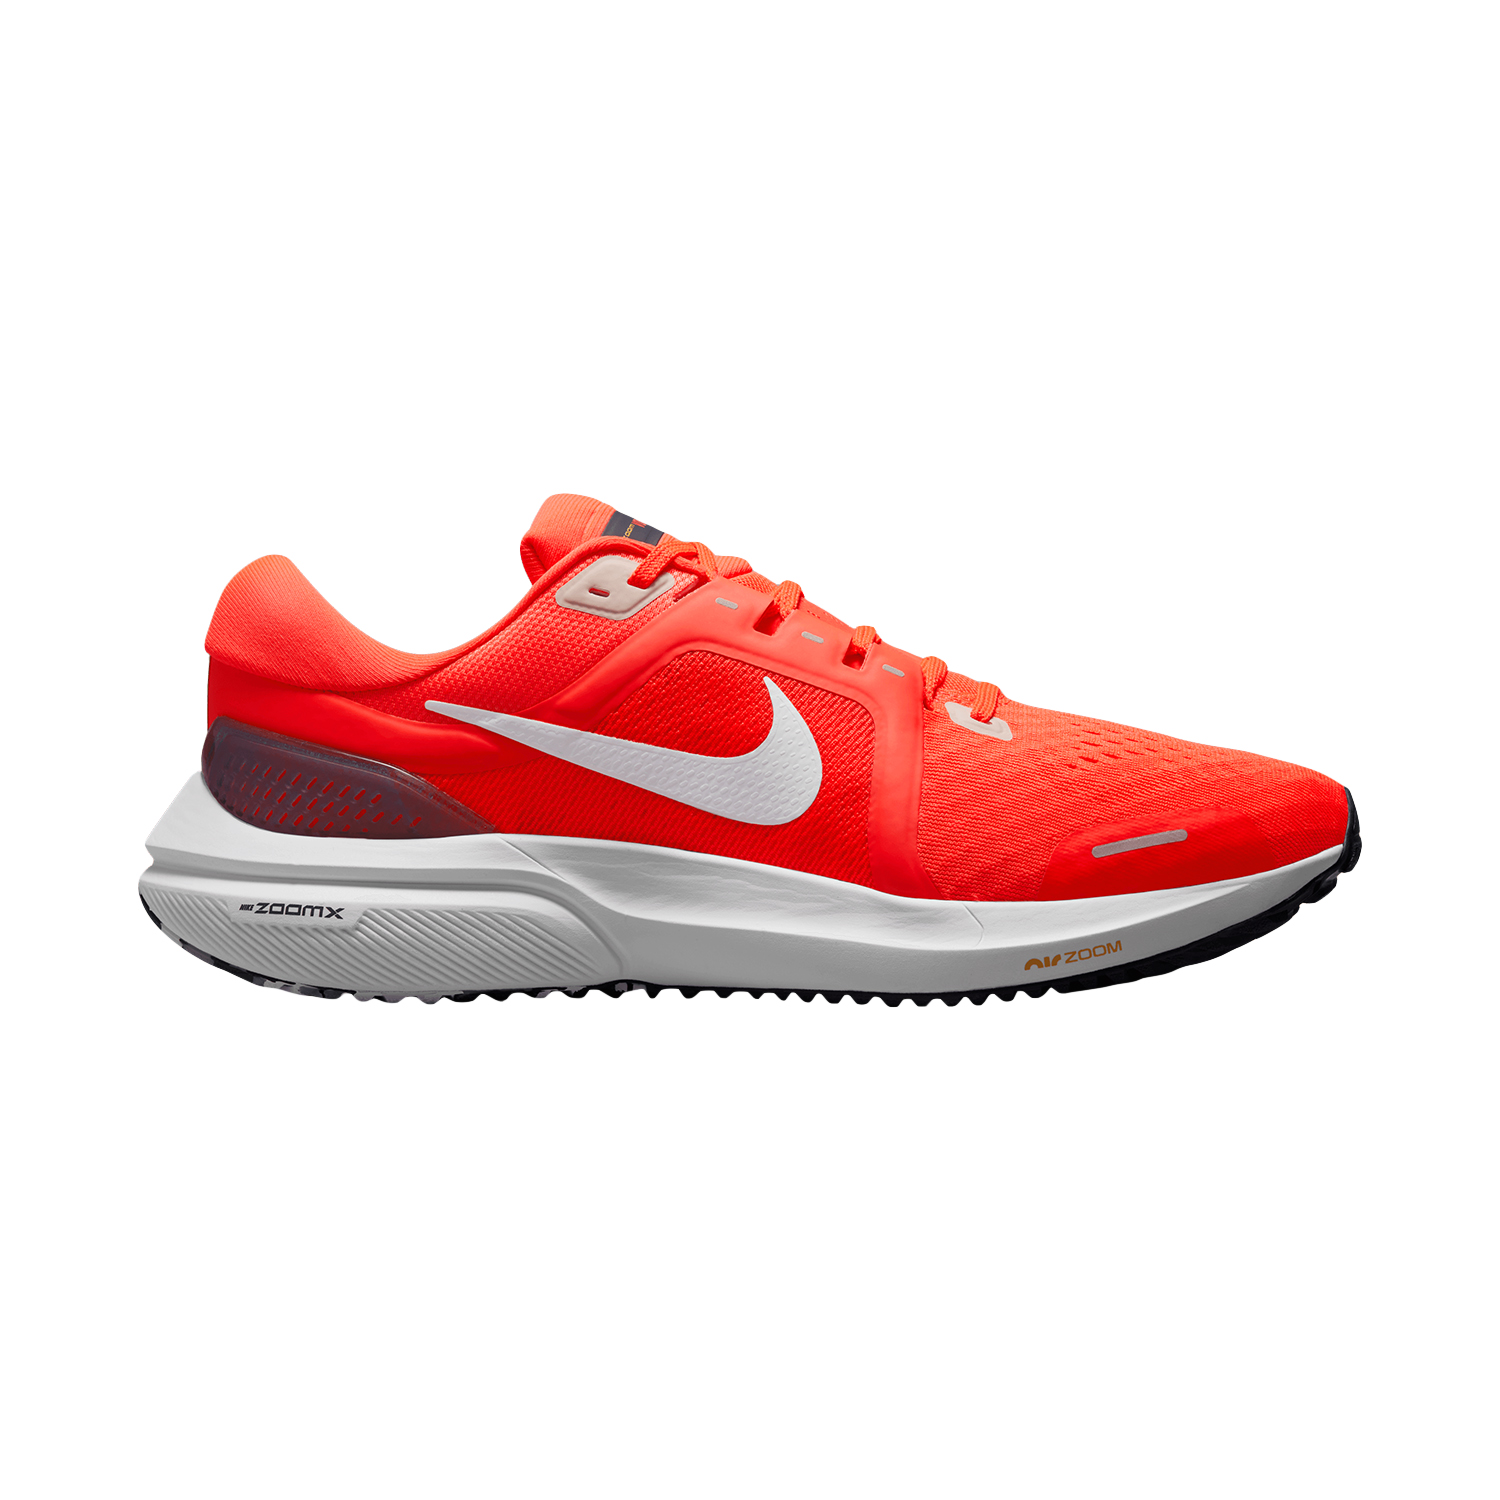 Nike Zoom Vomero Men's Shoes - Bright Crimson